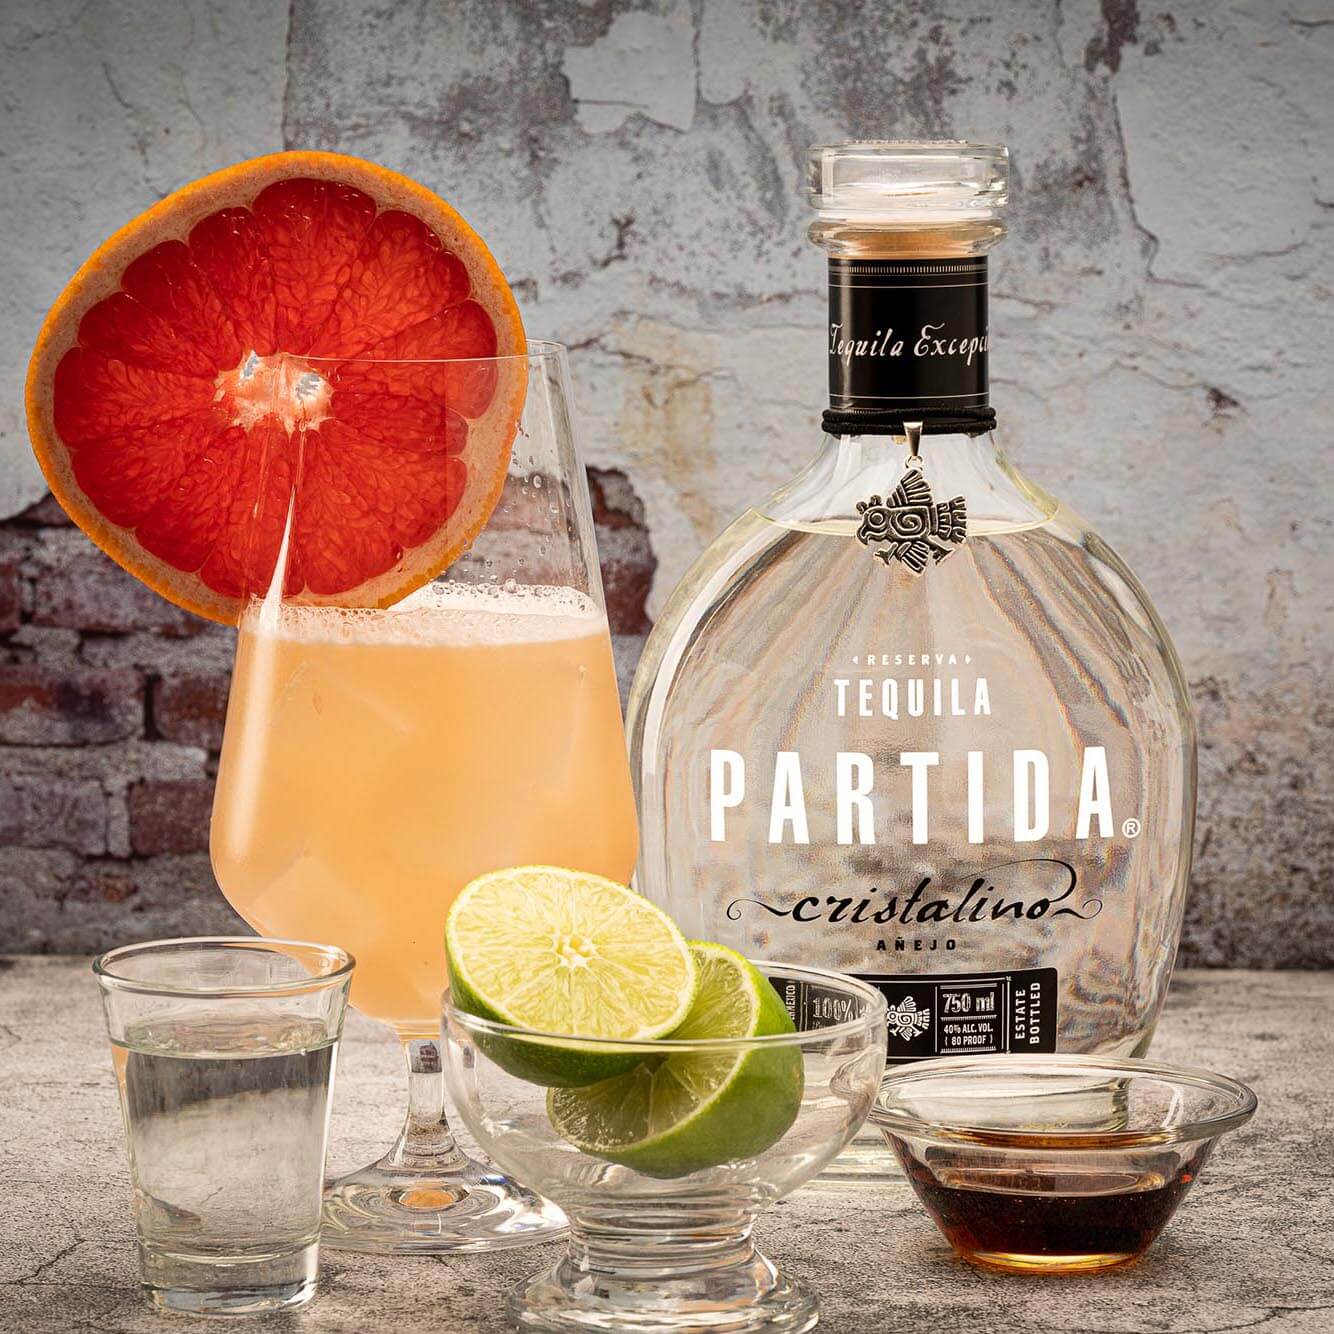 PALOMA CRISTALINO – Partida Tequila